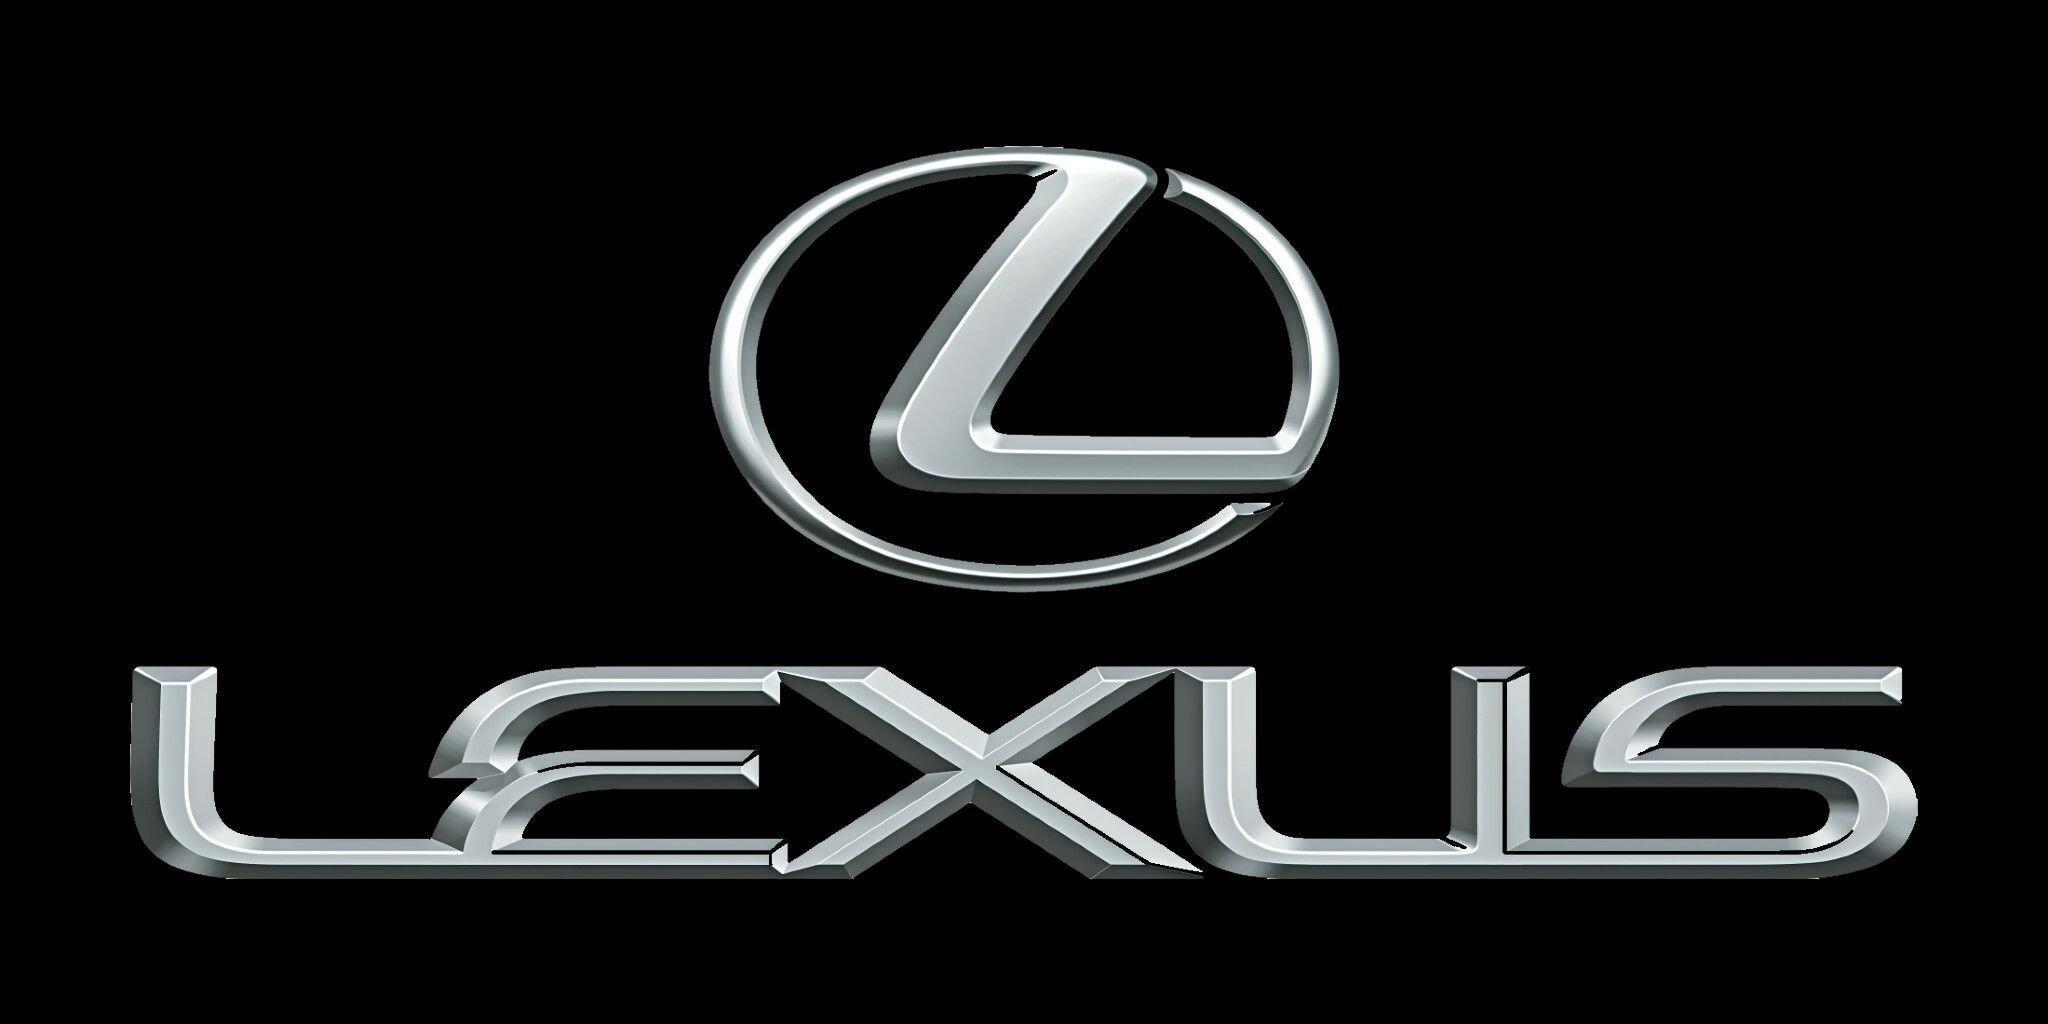 lexus logo wallpaper,text,schriftart,fahrzeug,auto,lexus